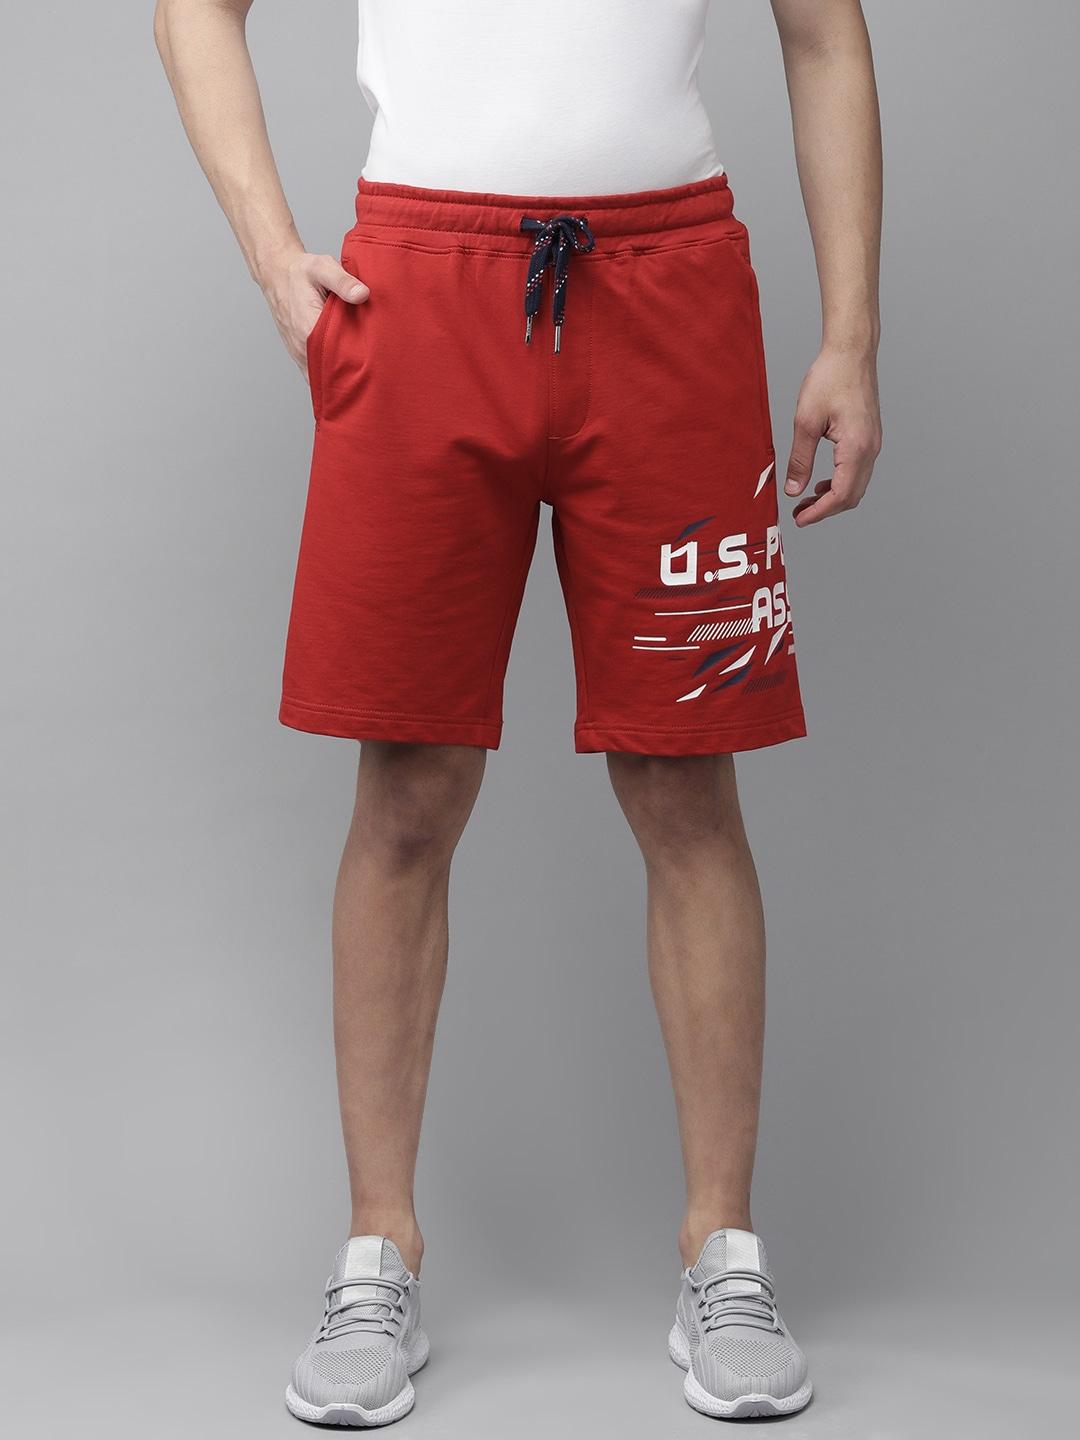 u-s-polo-assn-men-red-typography-printed-regular-shorts